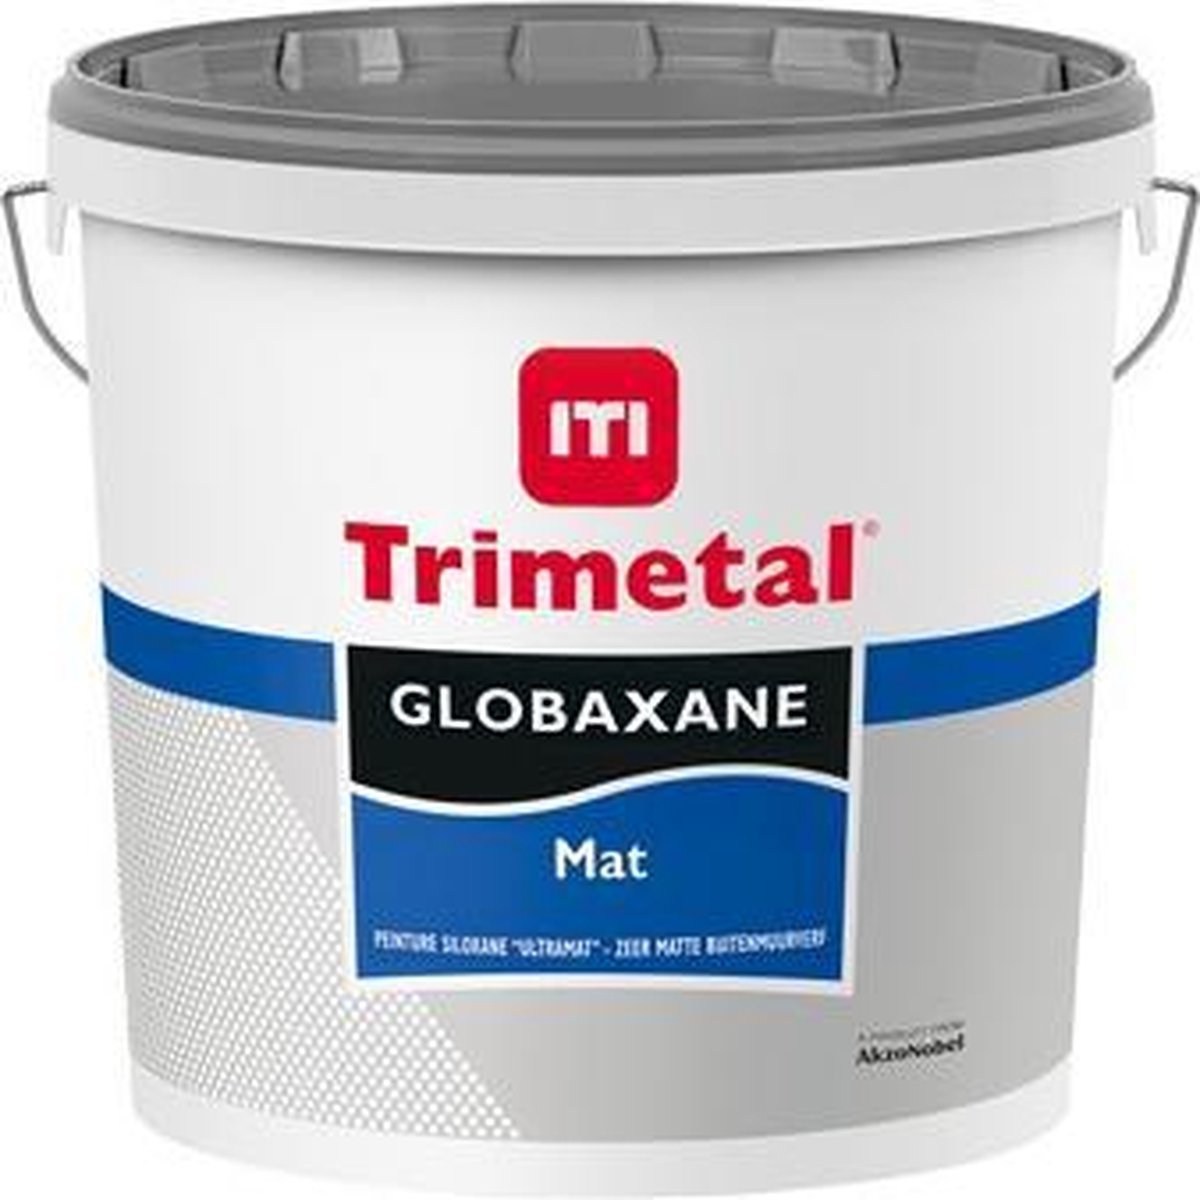 Trimetal Globaxane Mat - Wit/Kleur - 5L, 10L